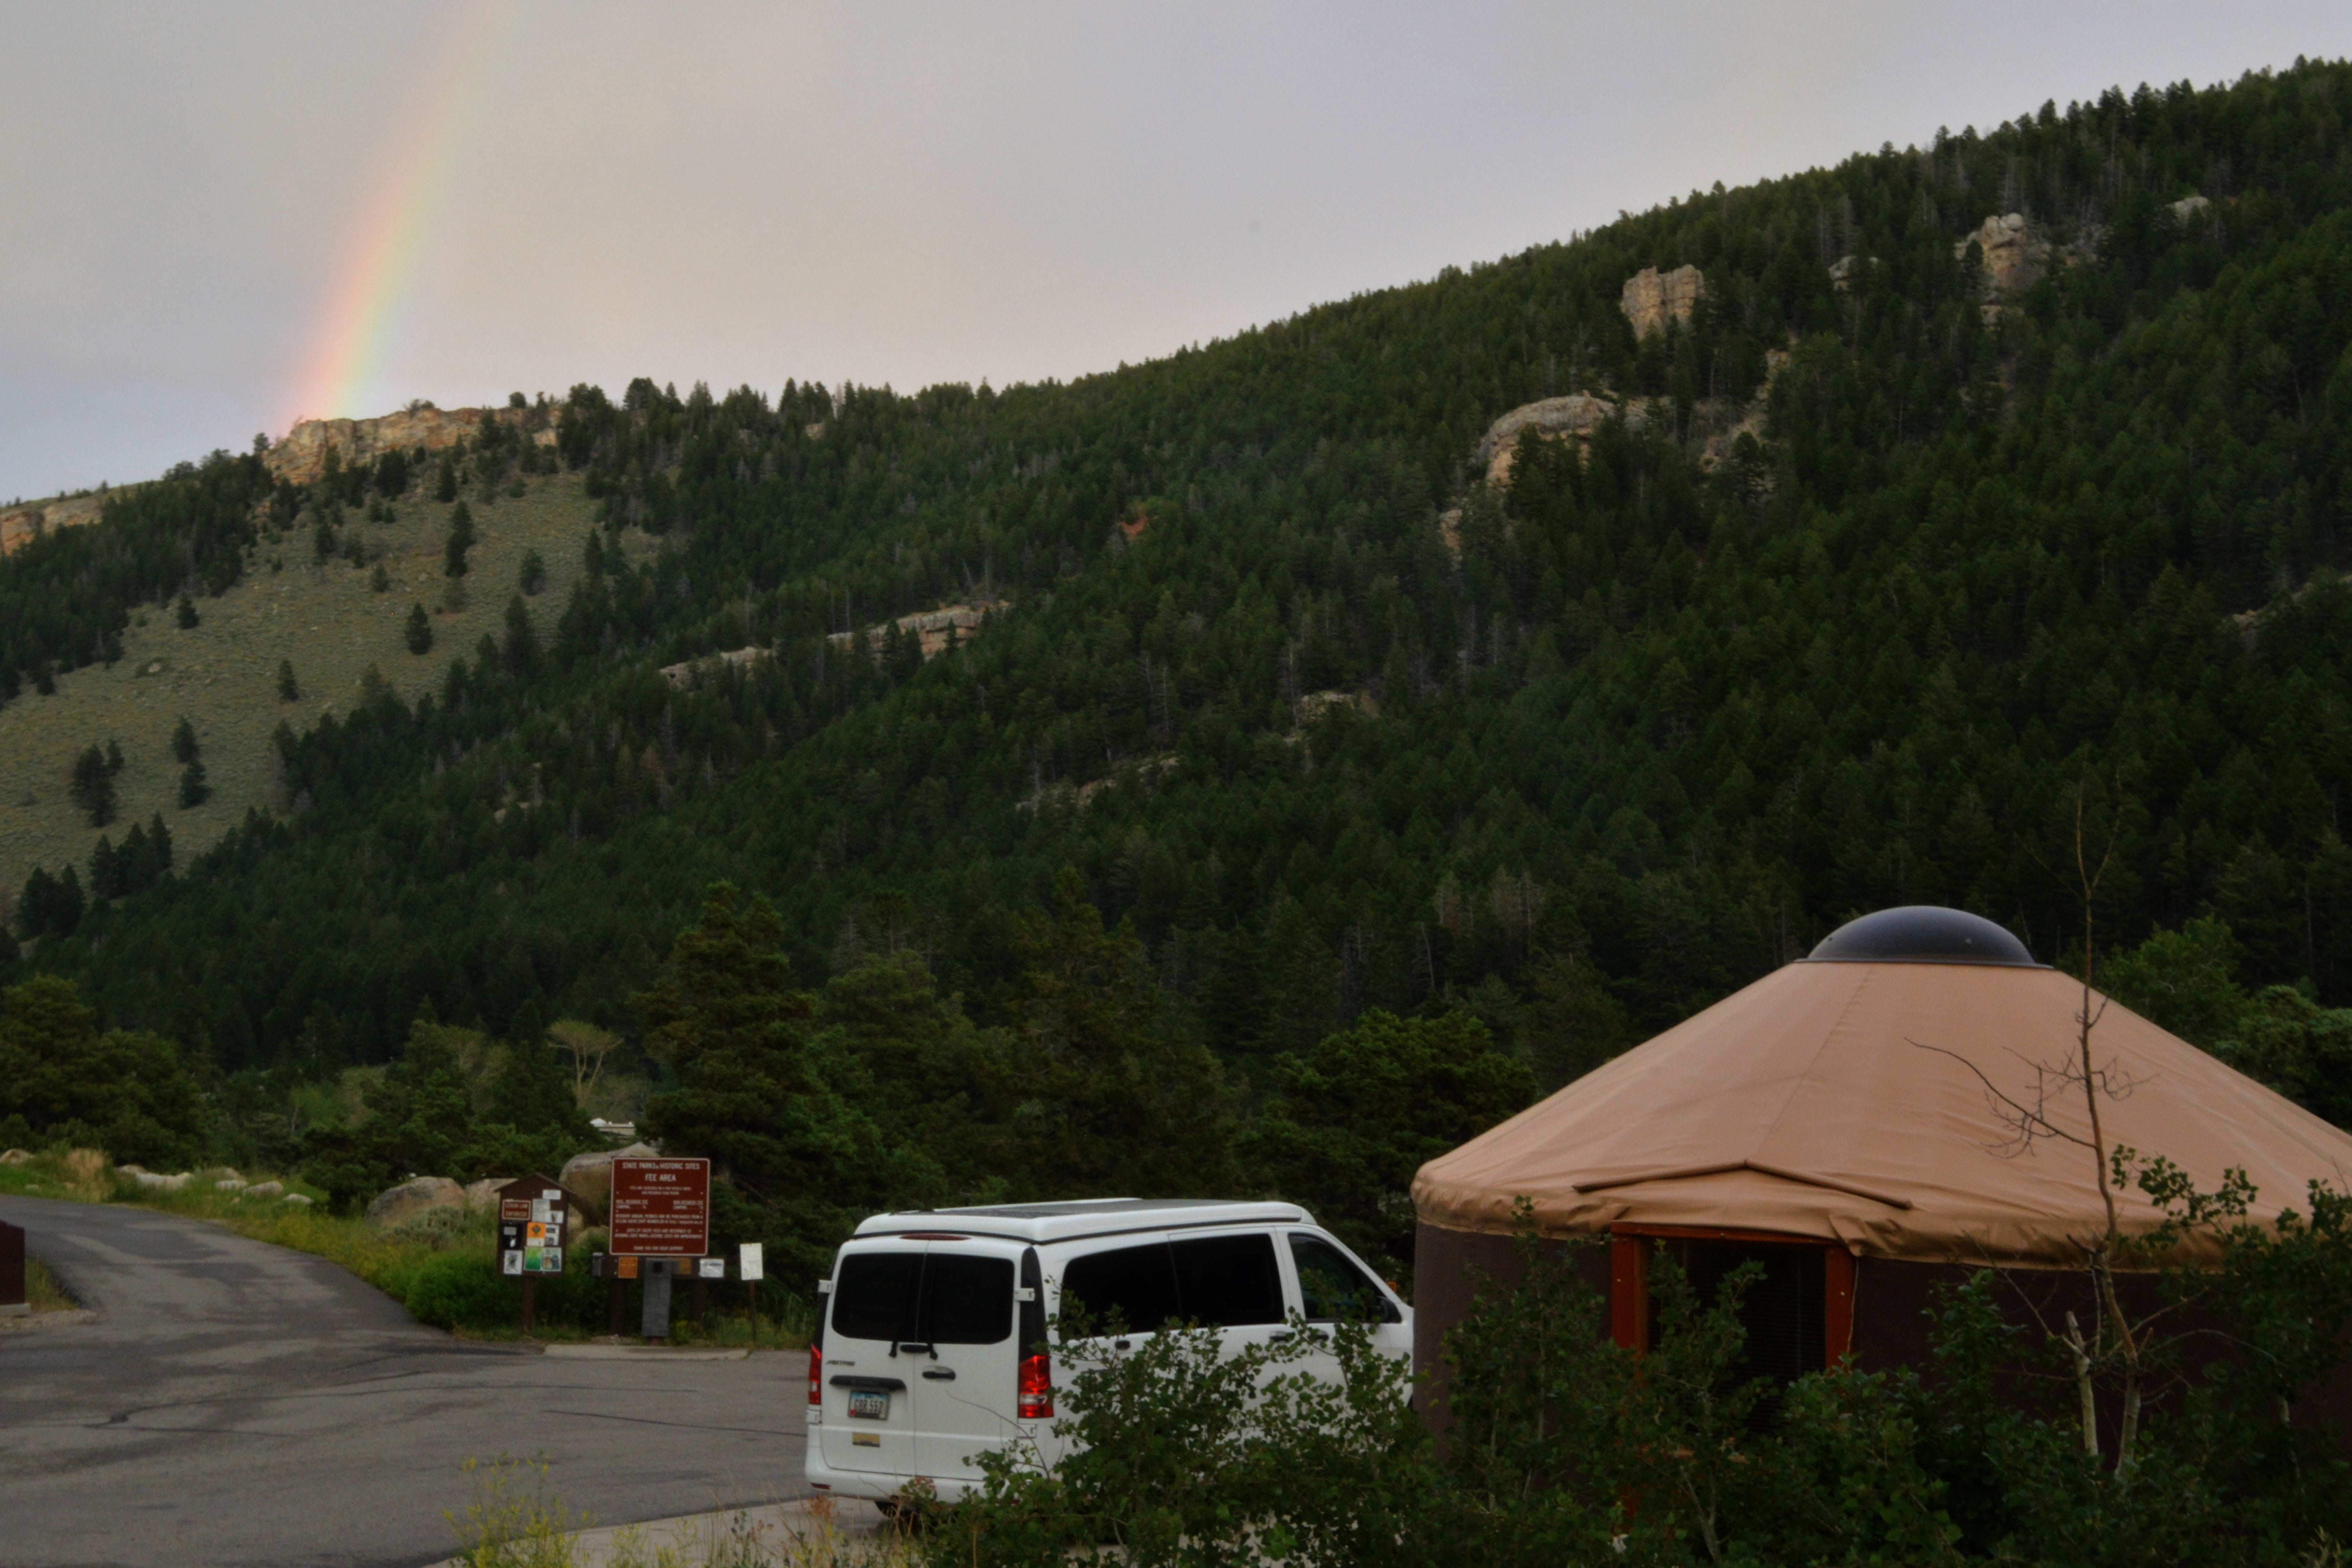 A rainbow shone over our yurt!